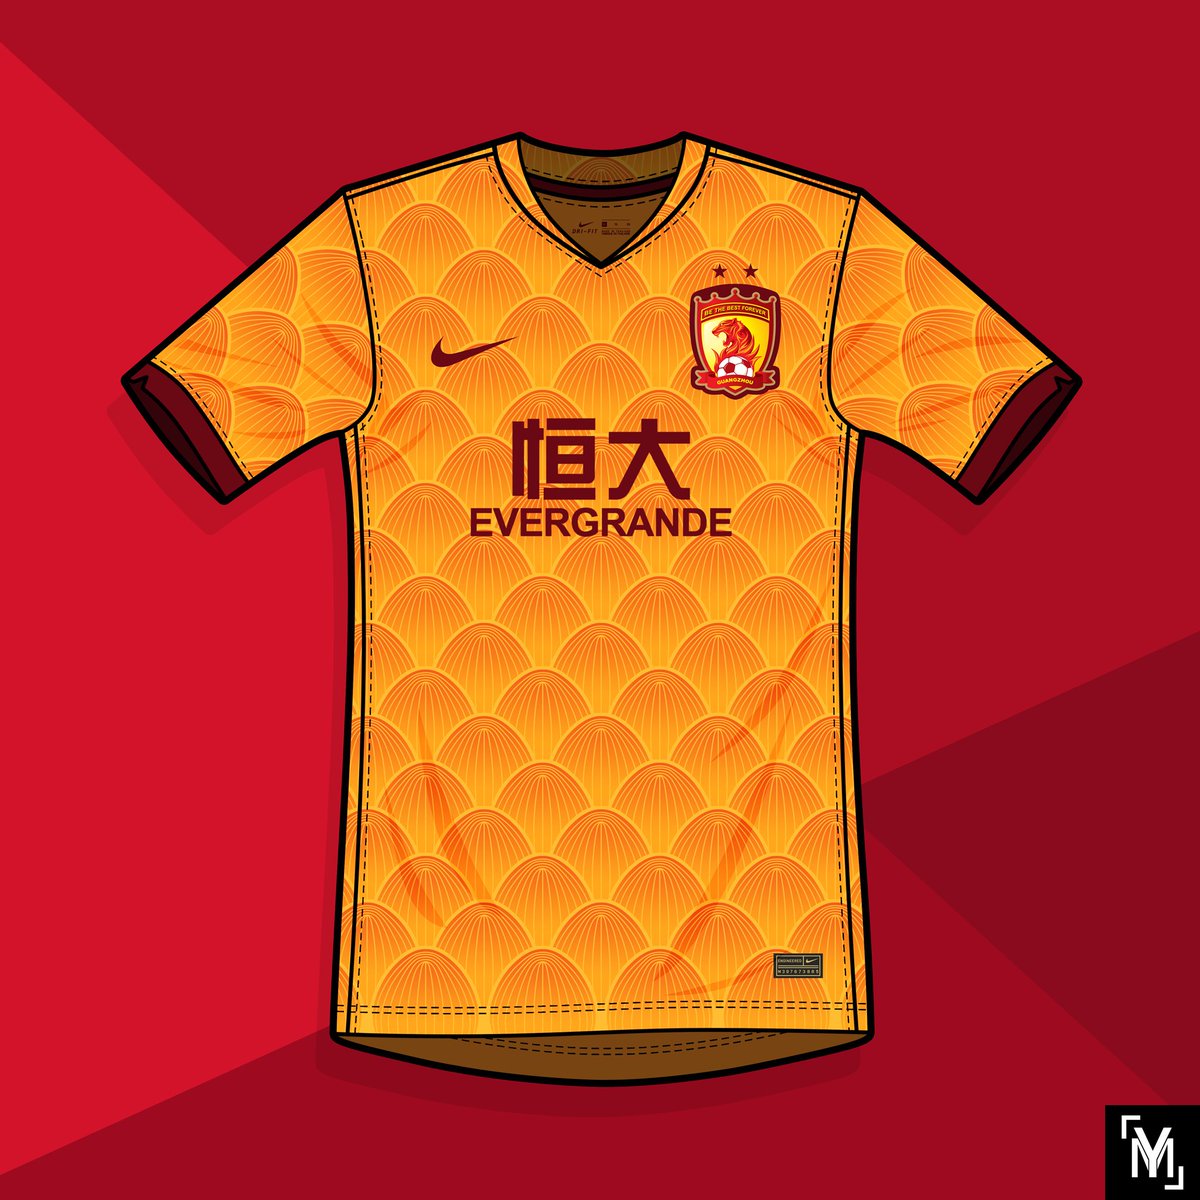 Guangzhou Evergrande FC X Nike | Fantasy kits

#GuangzhouFC #evergrande #CSL #ACL #China #Nike #KitDesign #ConceptKit #FootballKitDesign